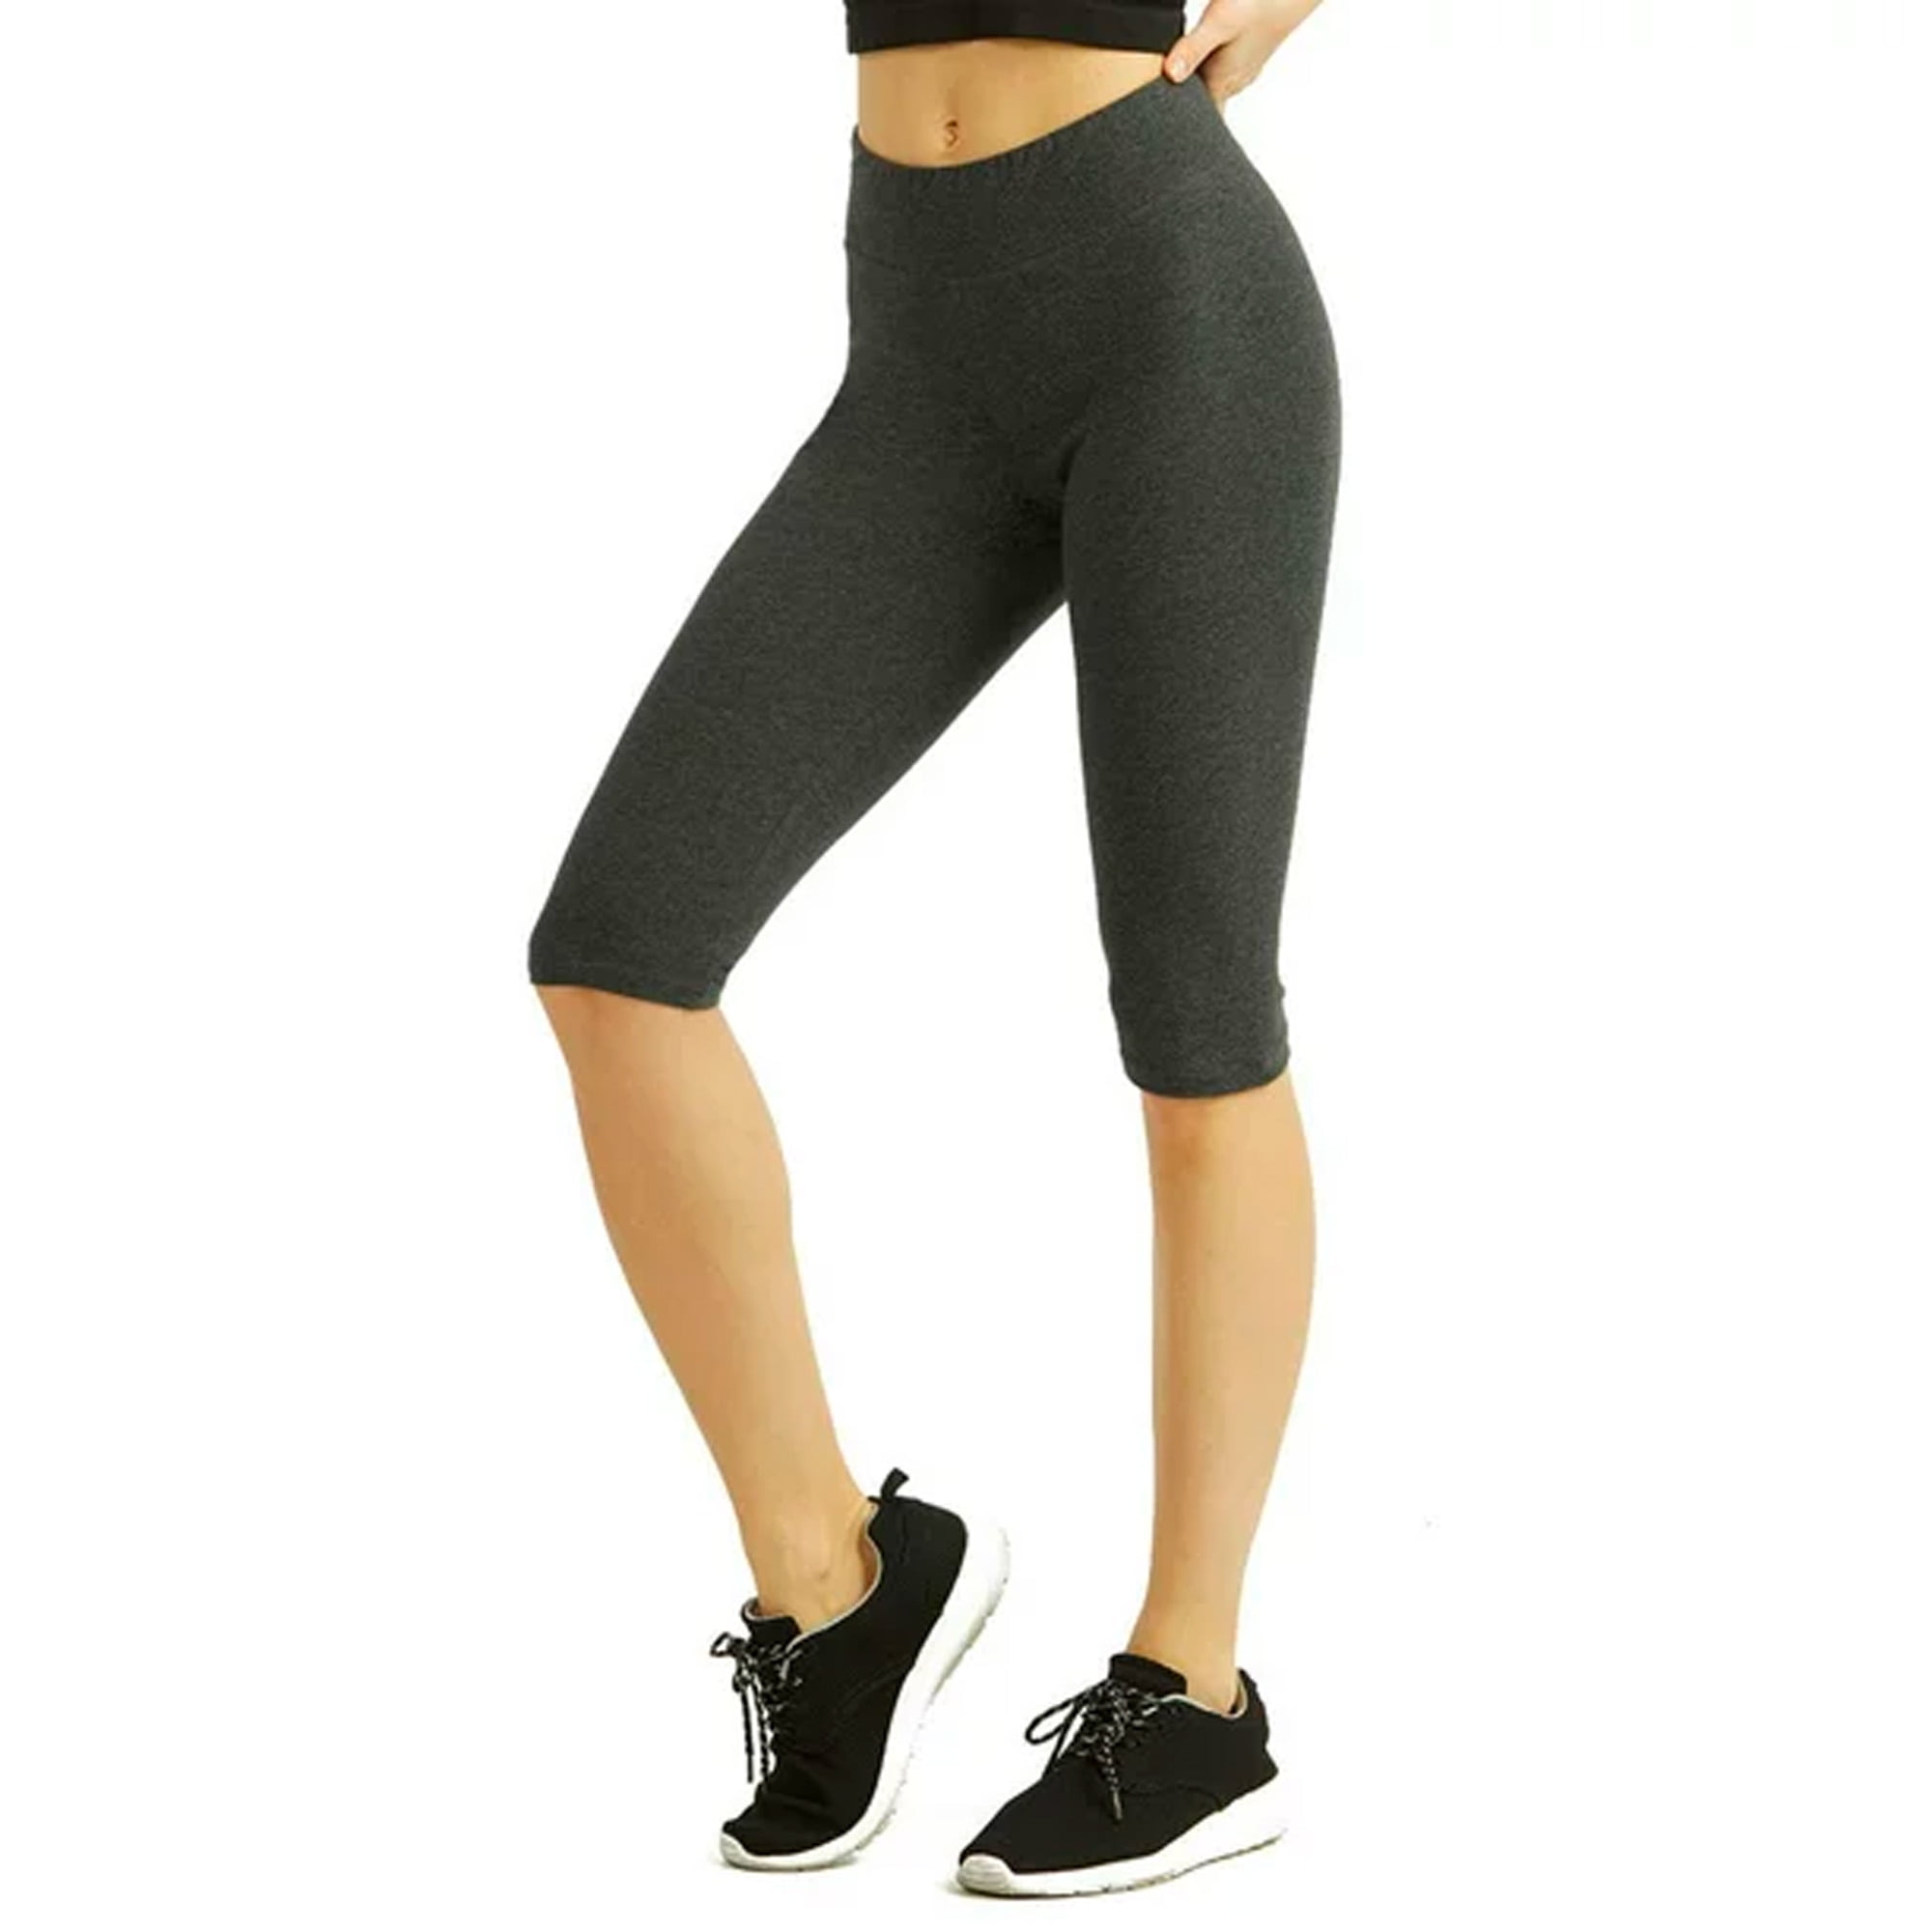 we fleece 3 Pack Women's Knee Length Capri Leggings-High Waisted Tummy  Control Non See Through Workout Leggings Yoga Pants (Small-Medium, A-3  Pack-Black,Black,Black) : Amazon.ca: Clothing, Shoes & Accessories